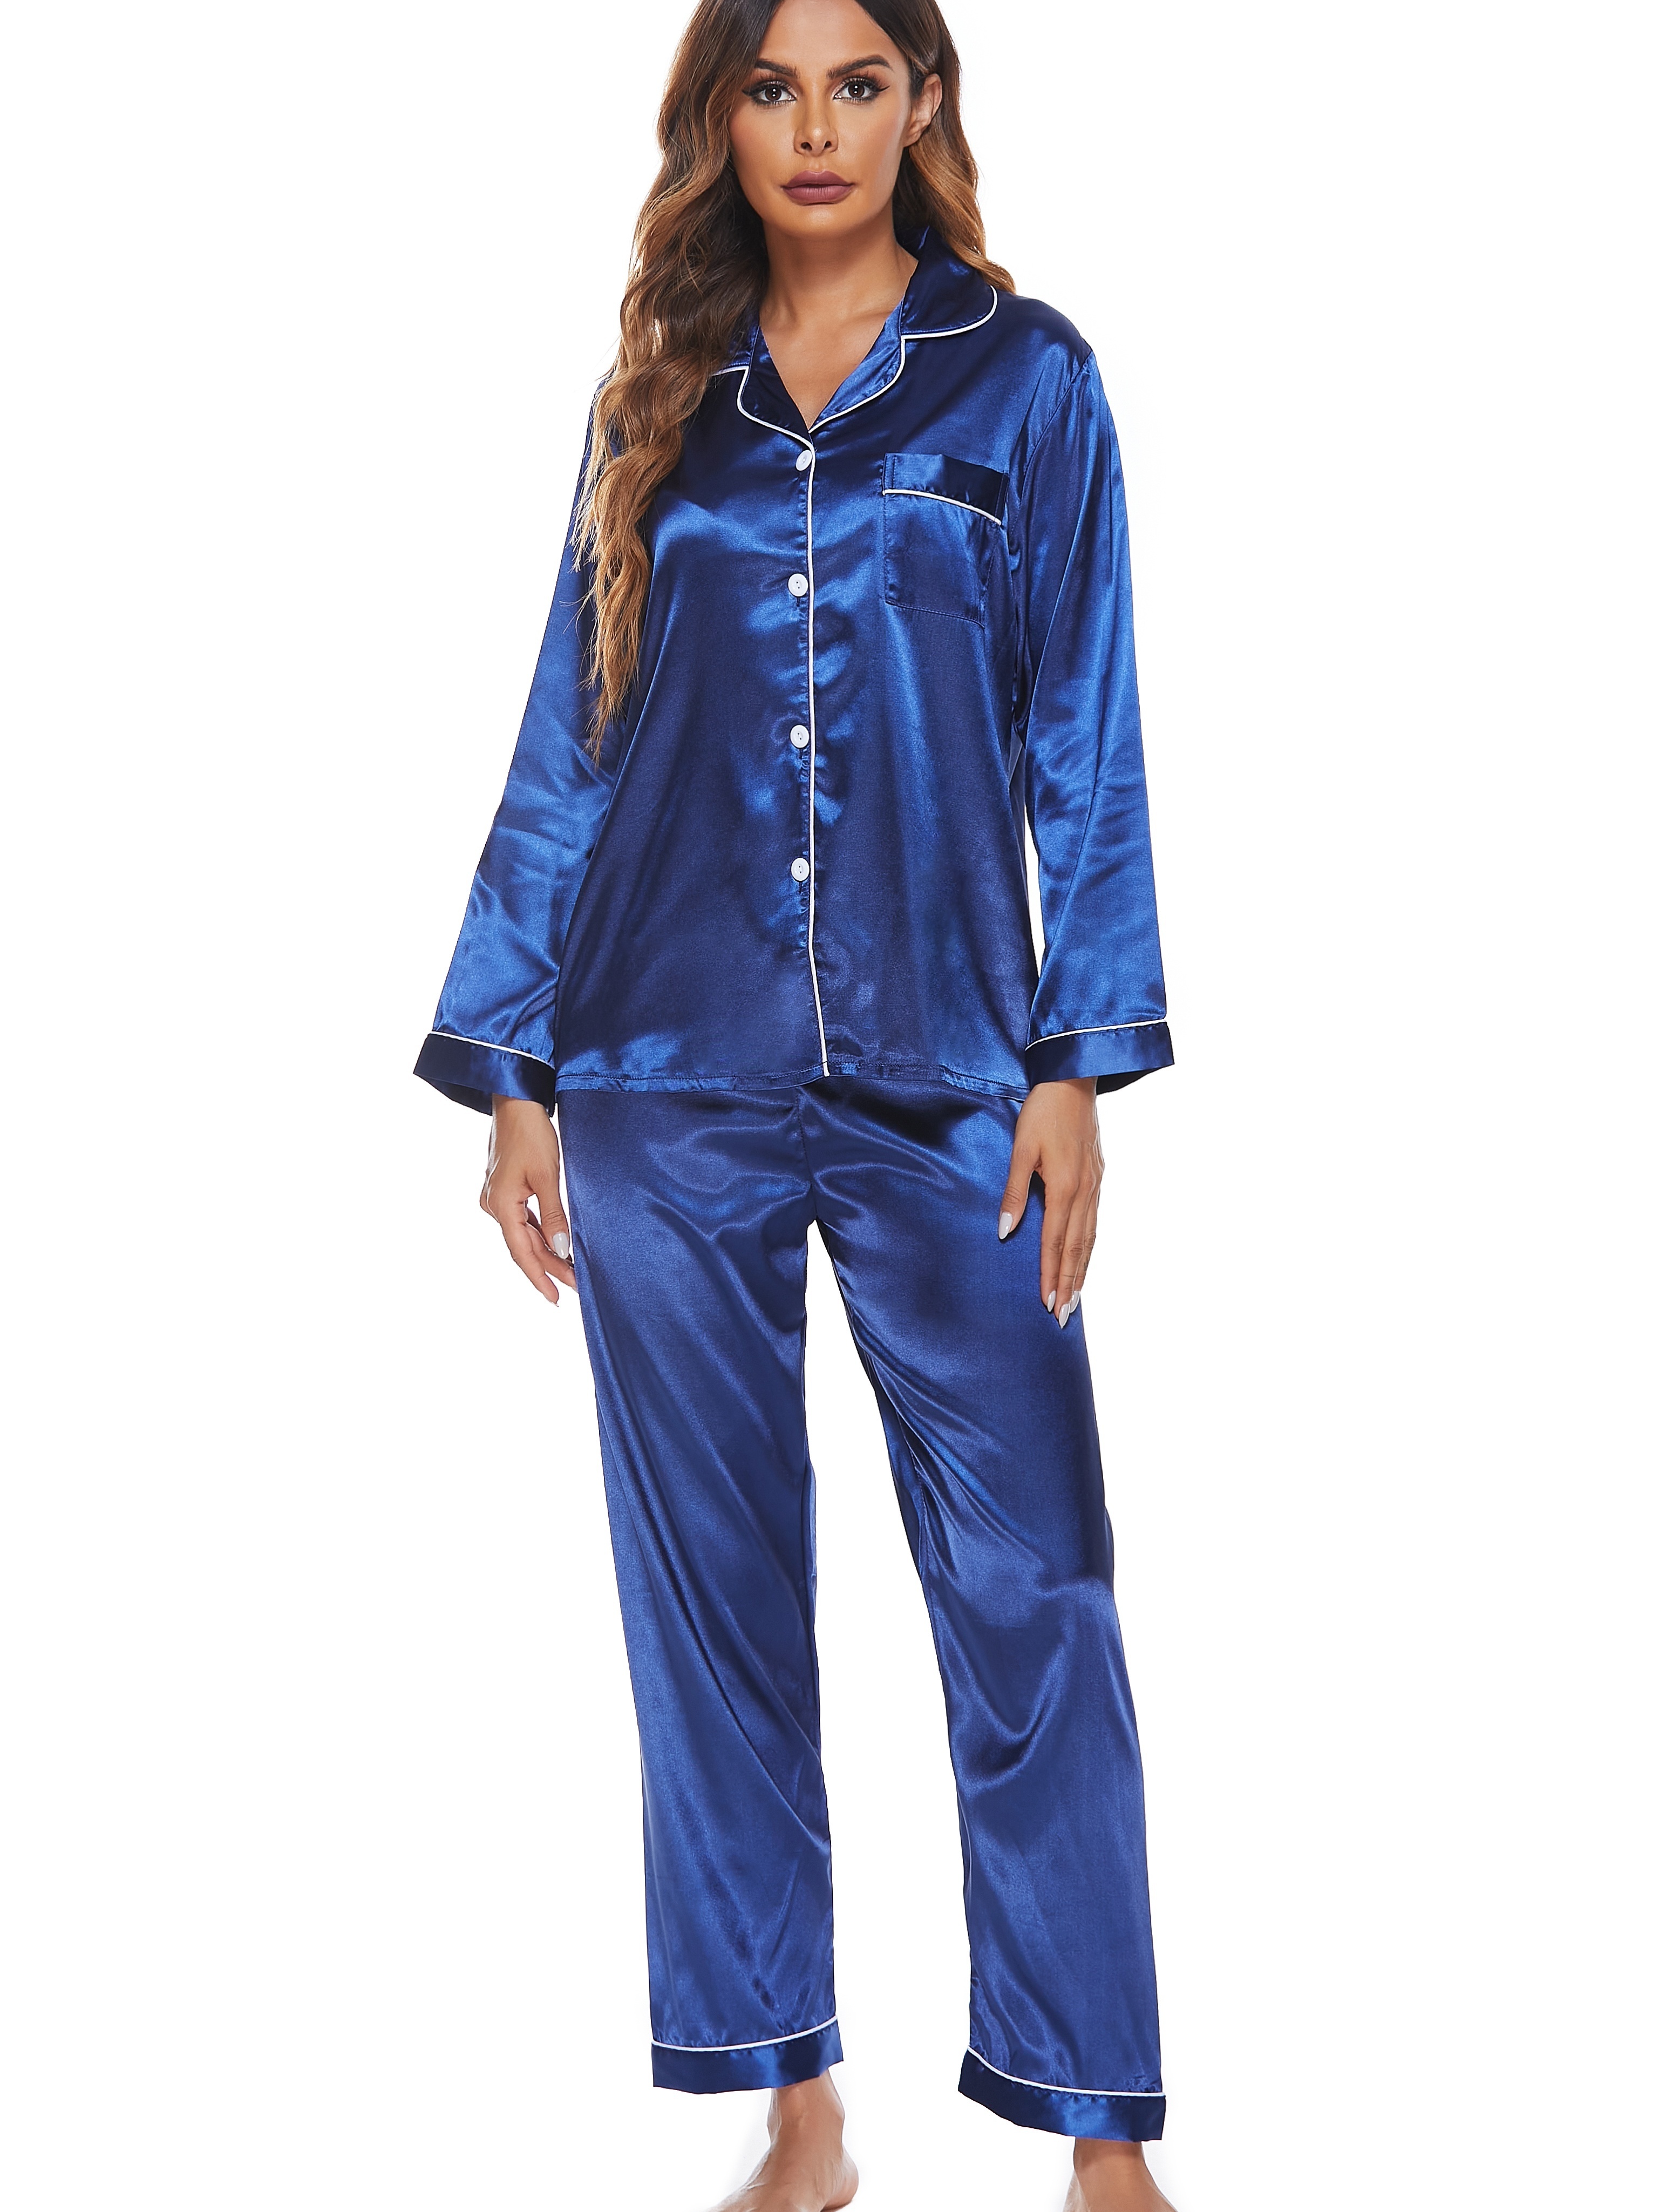 satin solid pajama set long sleeve button up top elastic waistband solid pants womens sleepwear loungewear